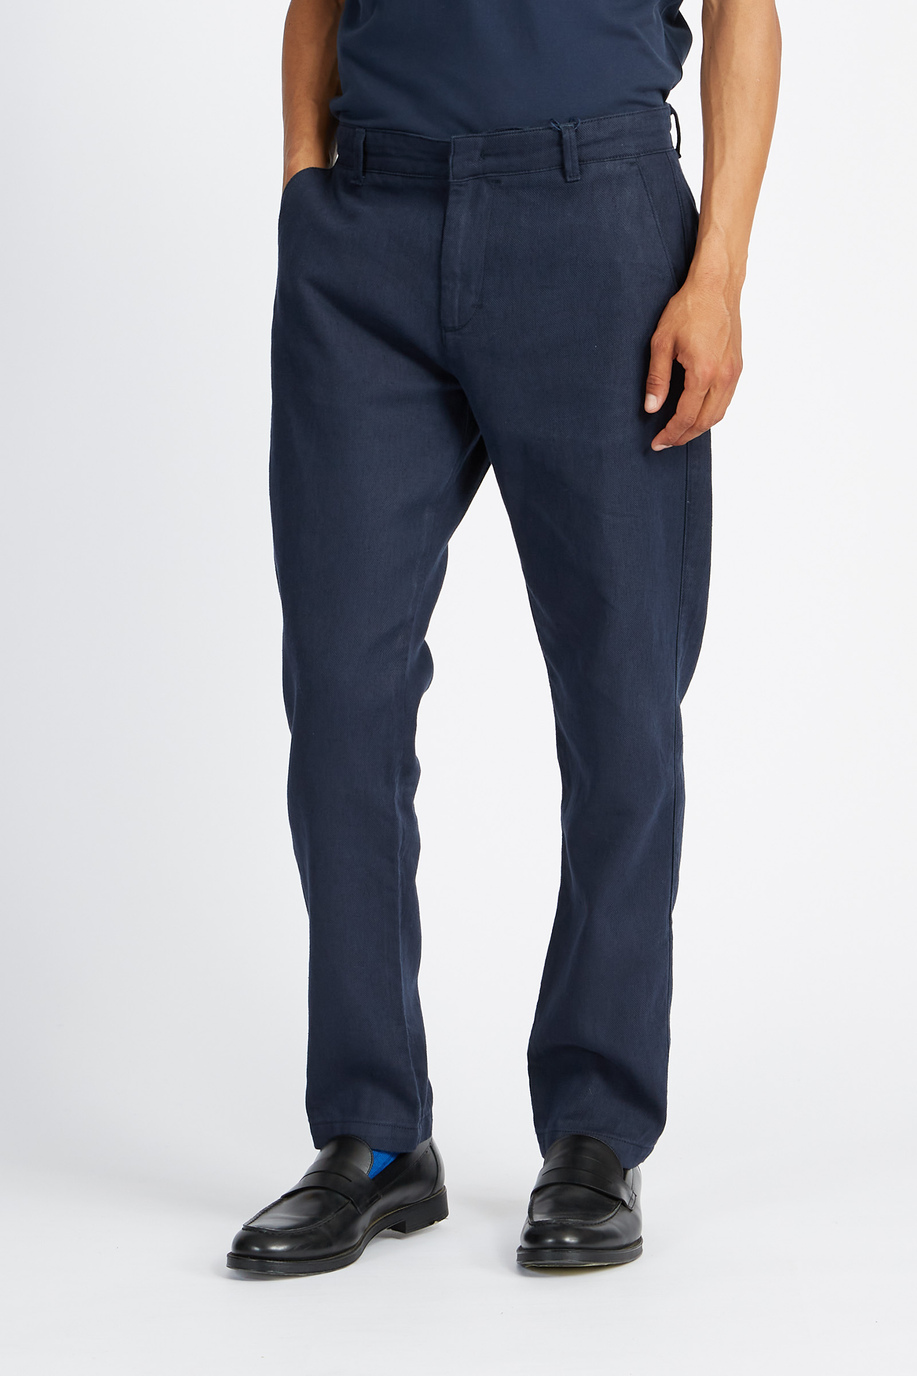 Pantalon chino homme coupe droite uni Logos - Vickan - Trousers | La Martina - Official Online Shop